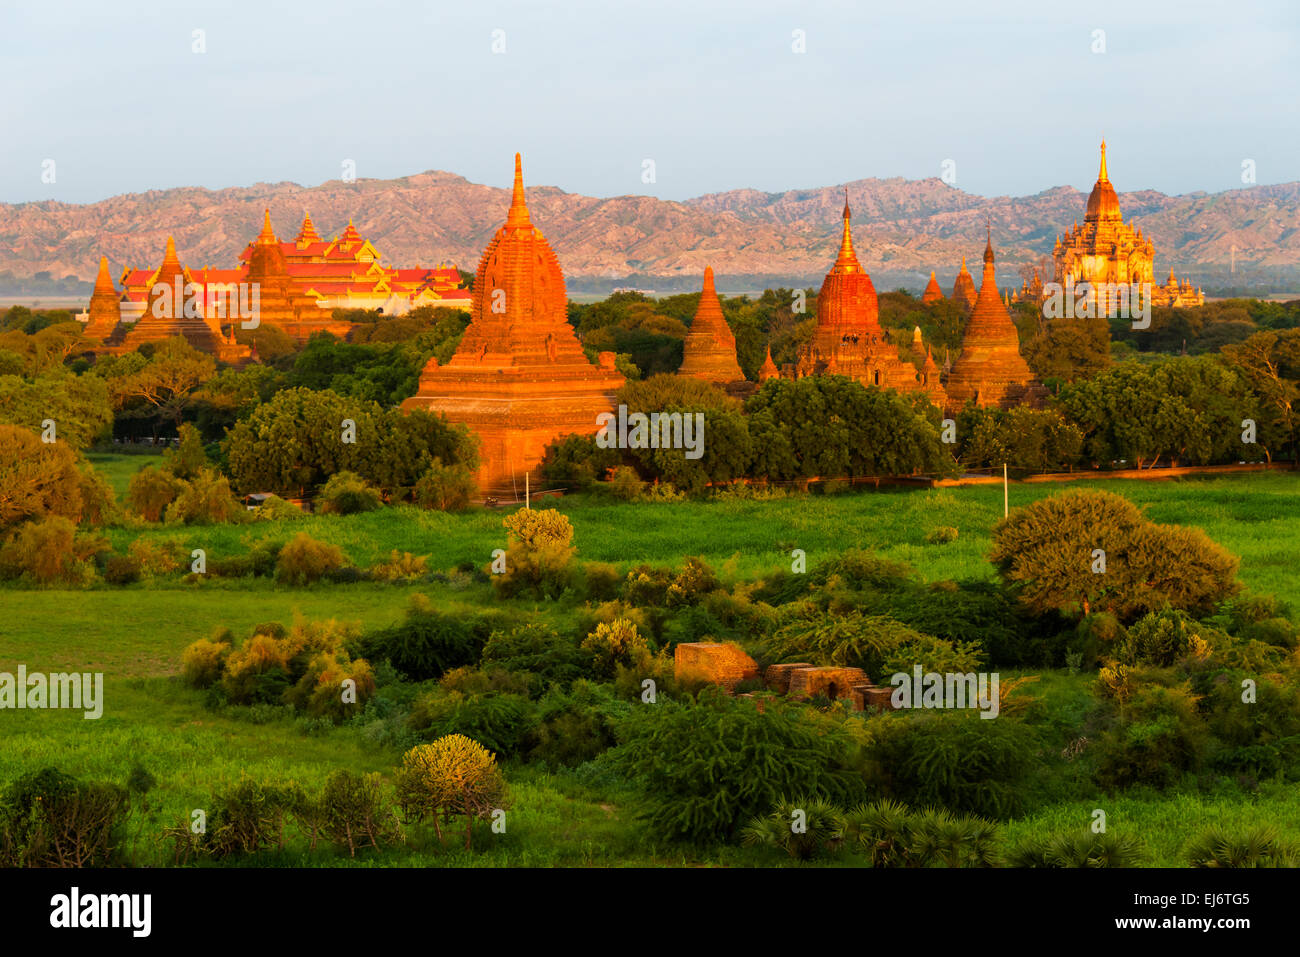 Antike Tempel und Pagoden steigt aus dem Dschungel bei Sonnenaufgang, Bagan, Mandalay Region, Myanmar Stockfoto